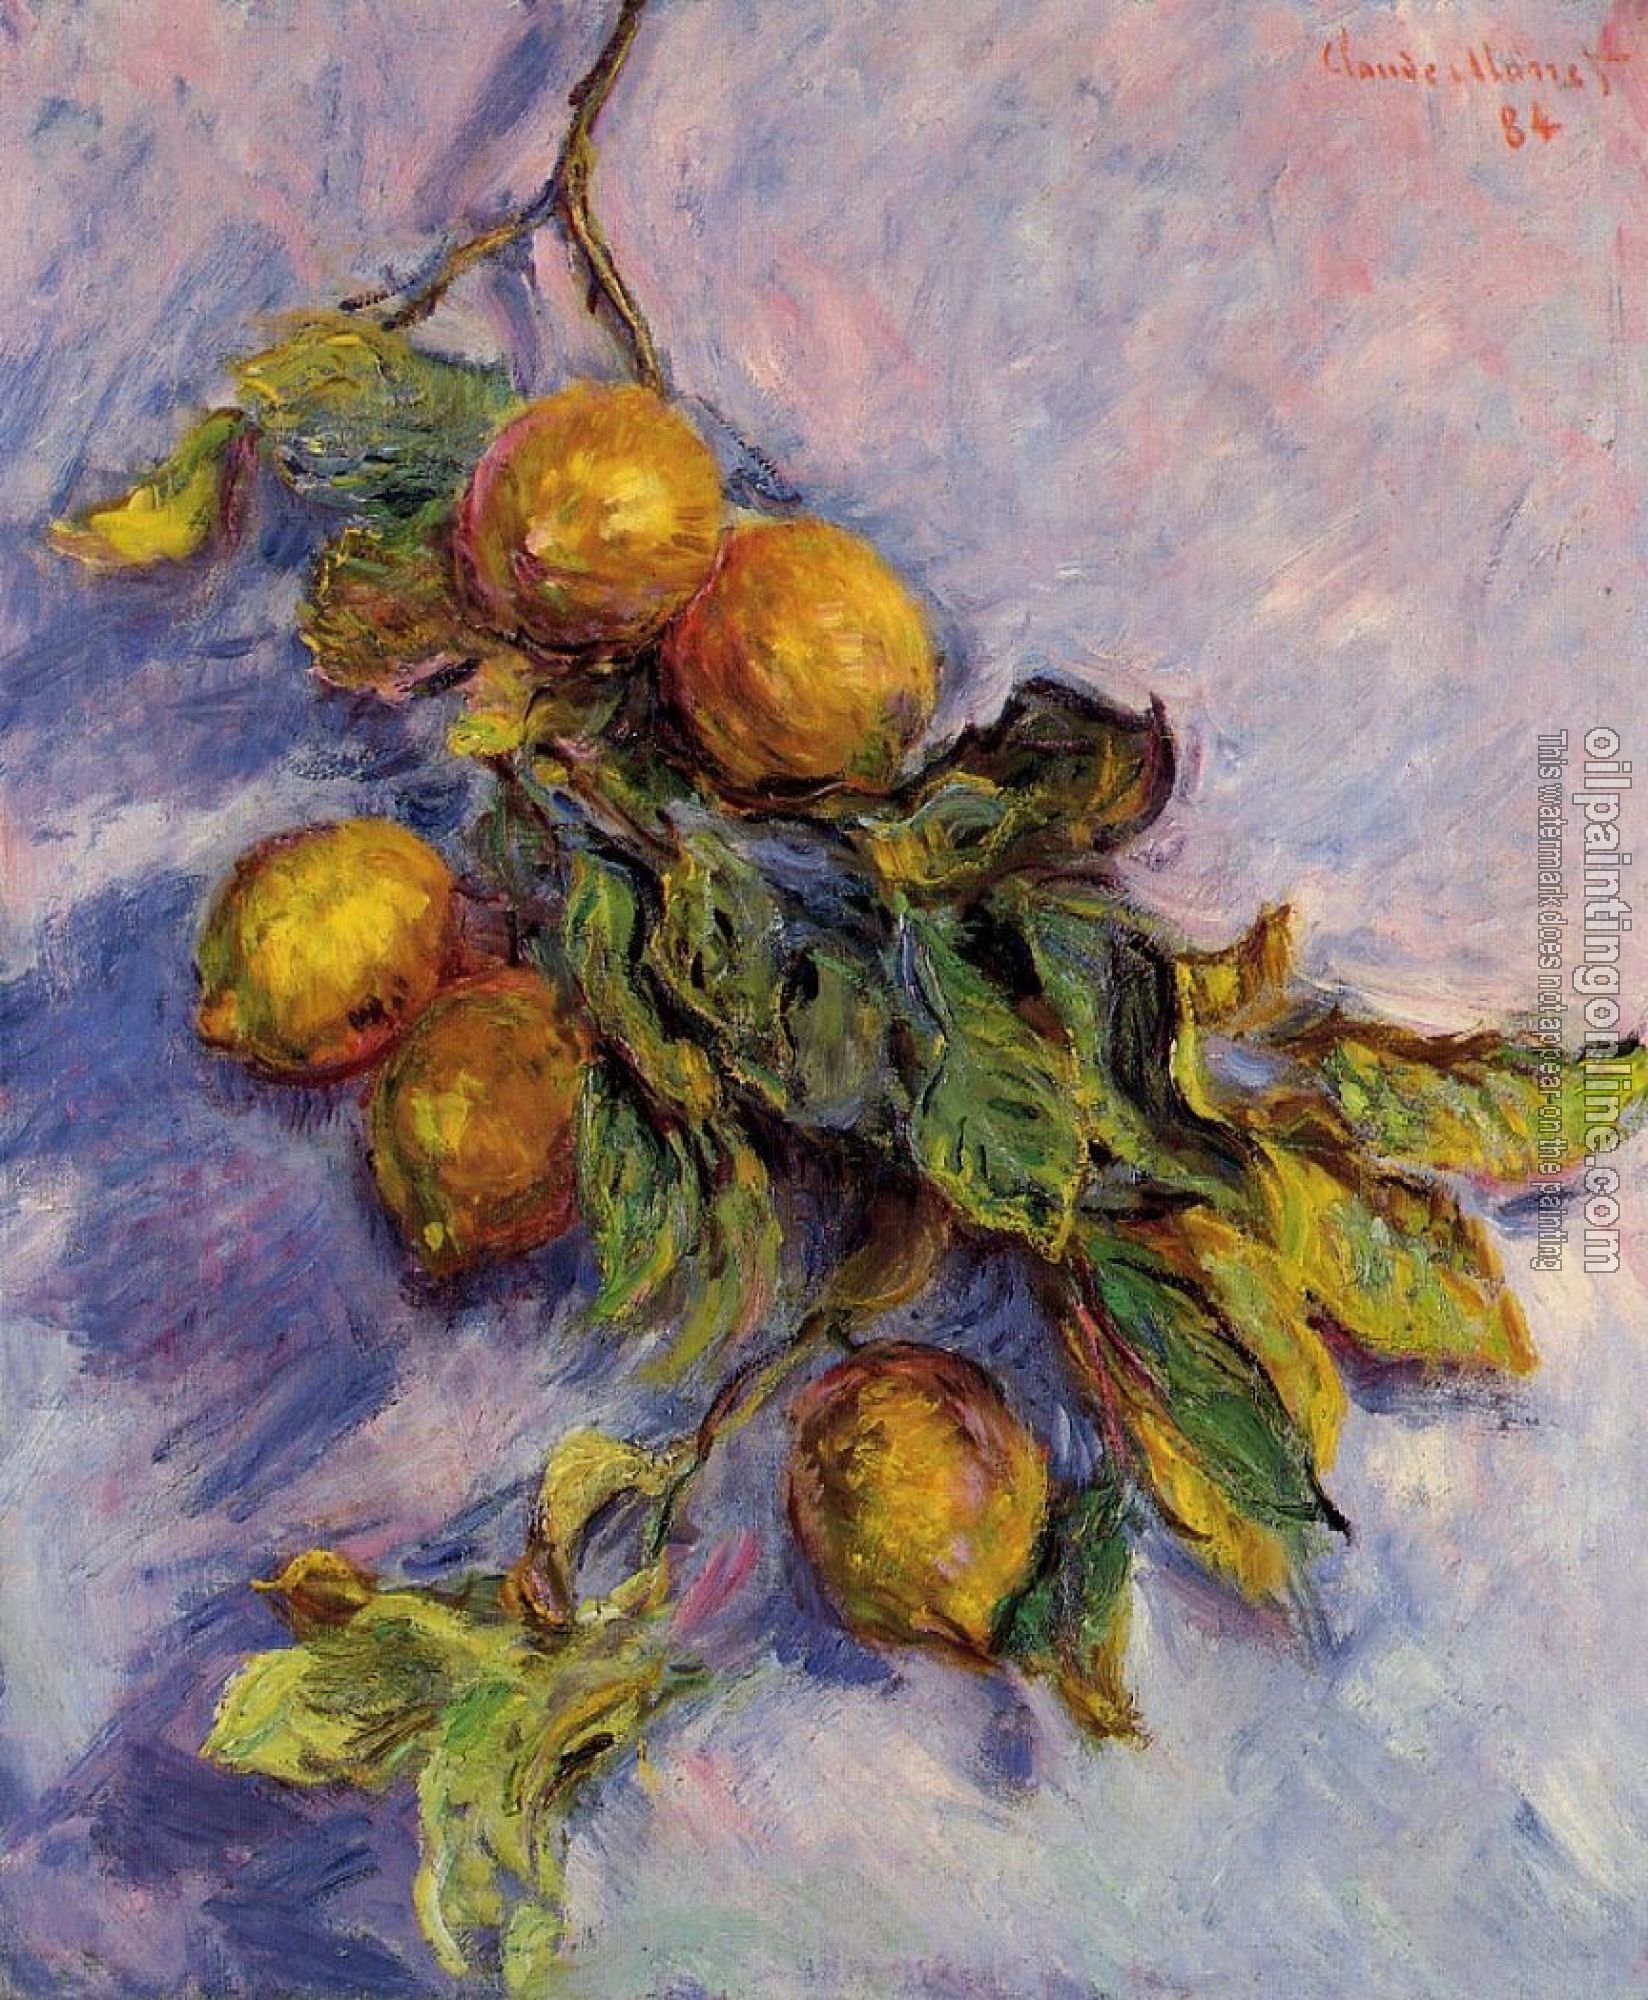 Monet, Claude Oscar - Lemons on a Branch